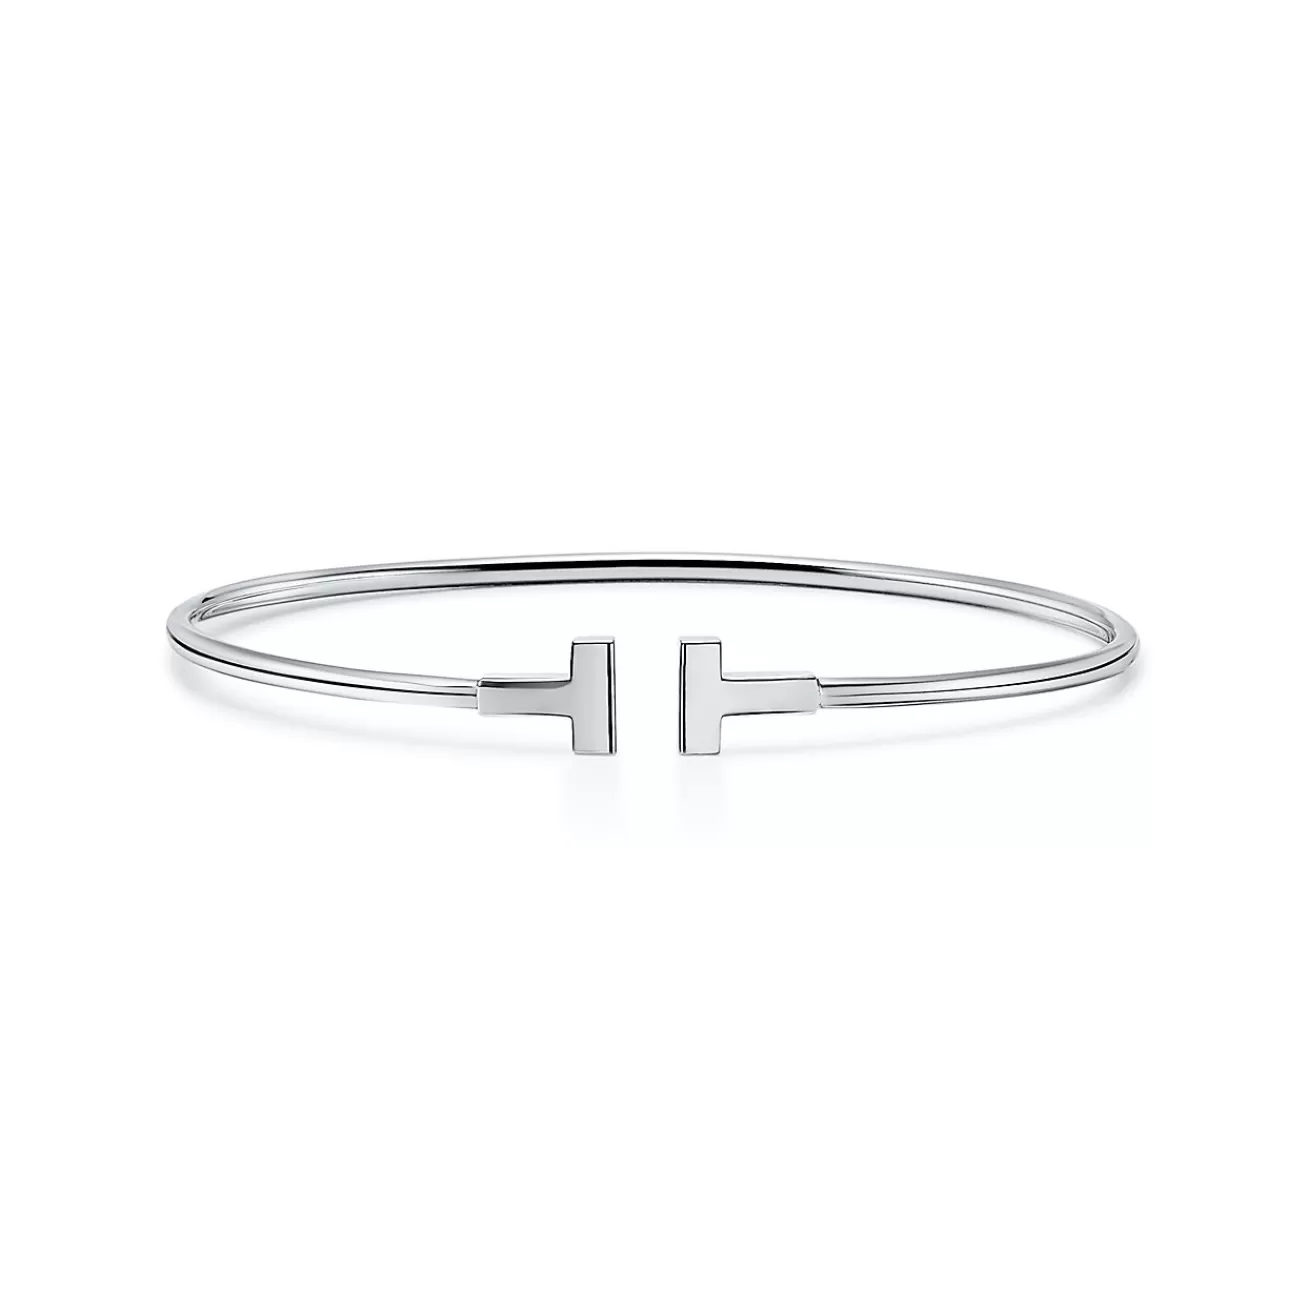 Tiffany & Co. Tiffany T narrow wire bracelet in 18k white gold, medium. | ^ Bracelets | Men's Jewelry